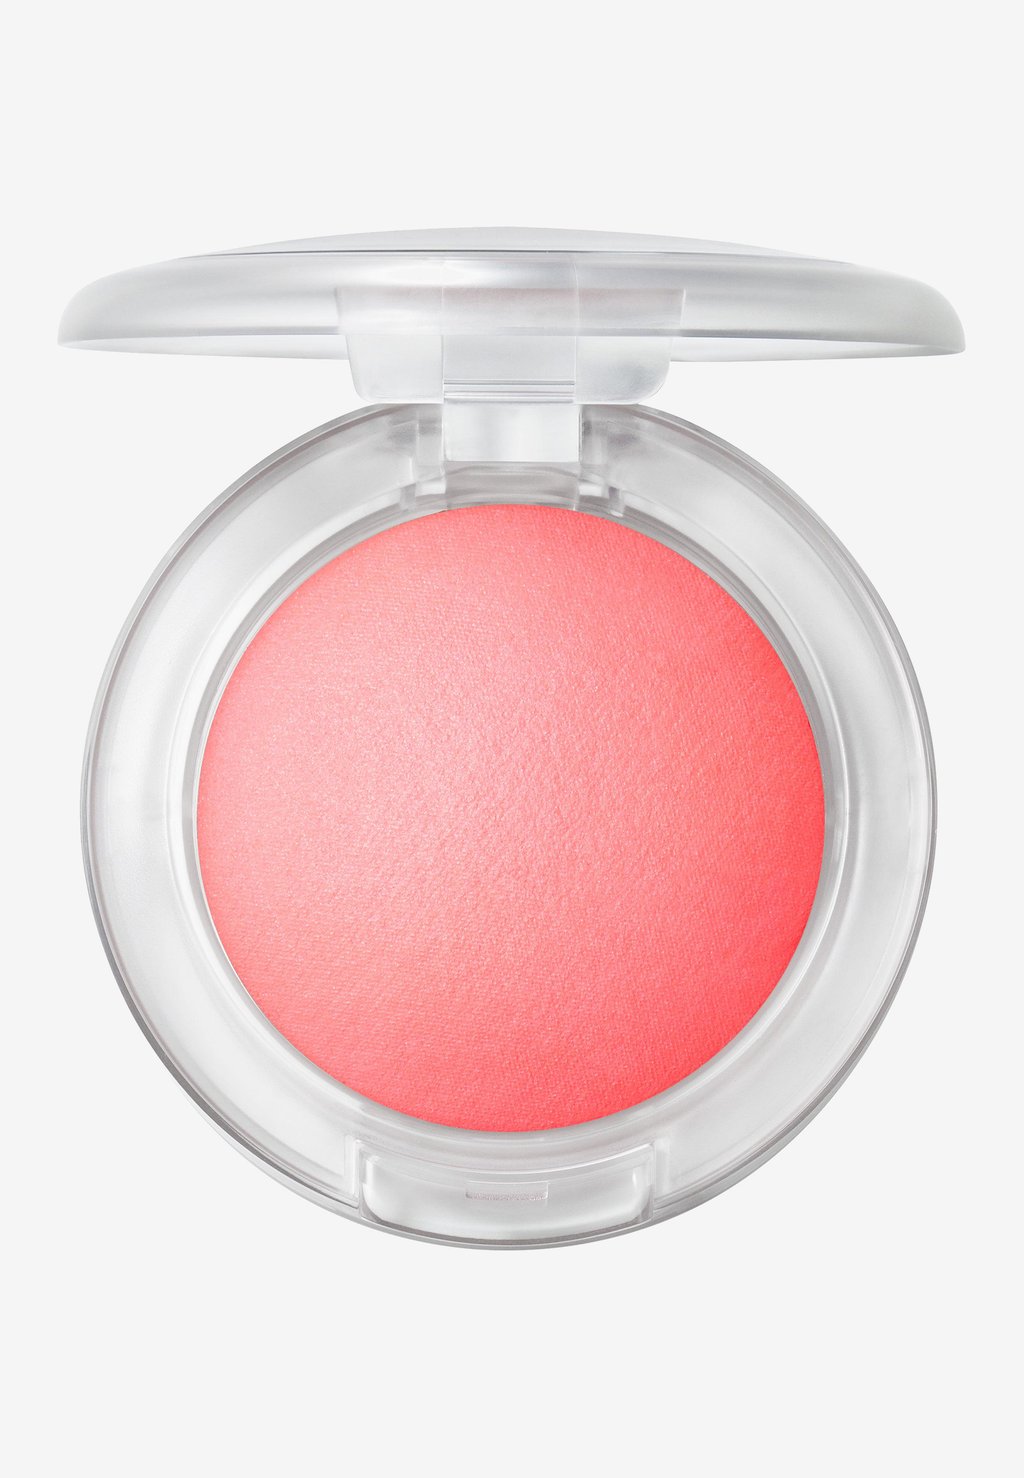 mac – glow play blush – румяна поднимите настроение Румяна GLOW PLAY BLUSH MAC, цвет that's peachy